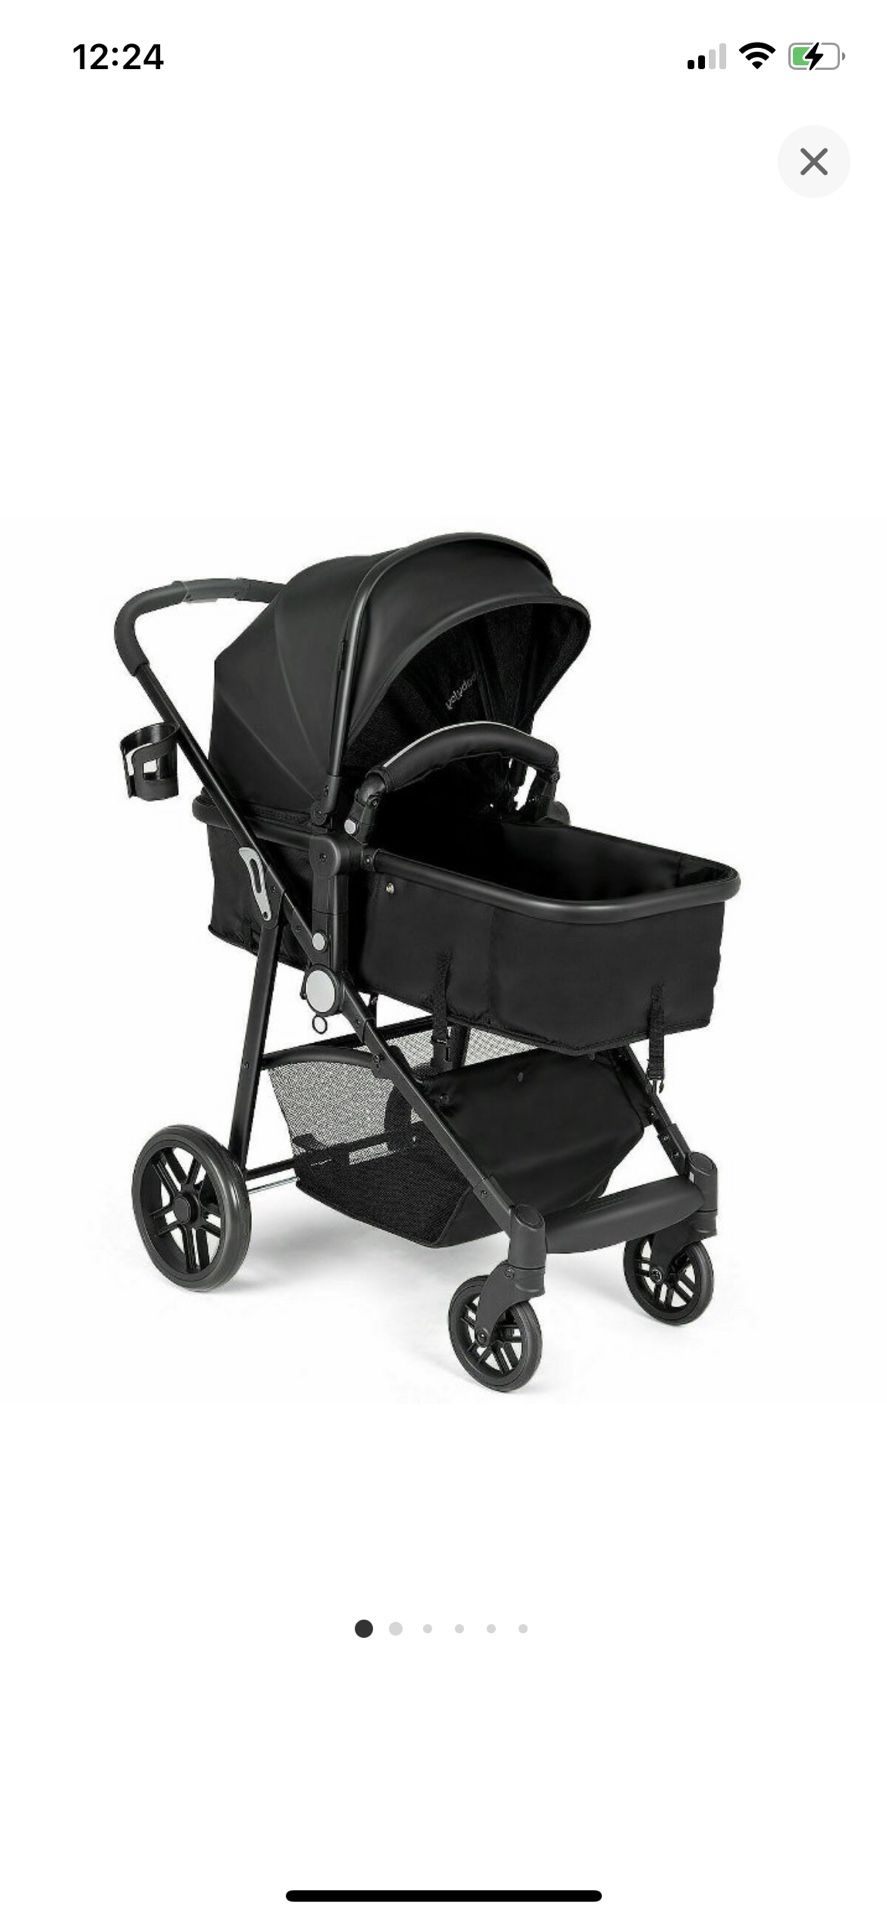 New (Still In Box) Baby Stroller